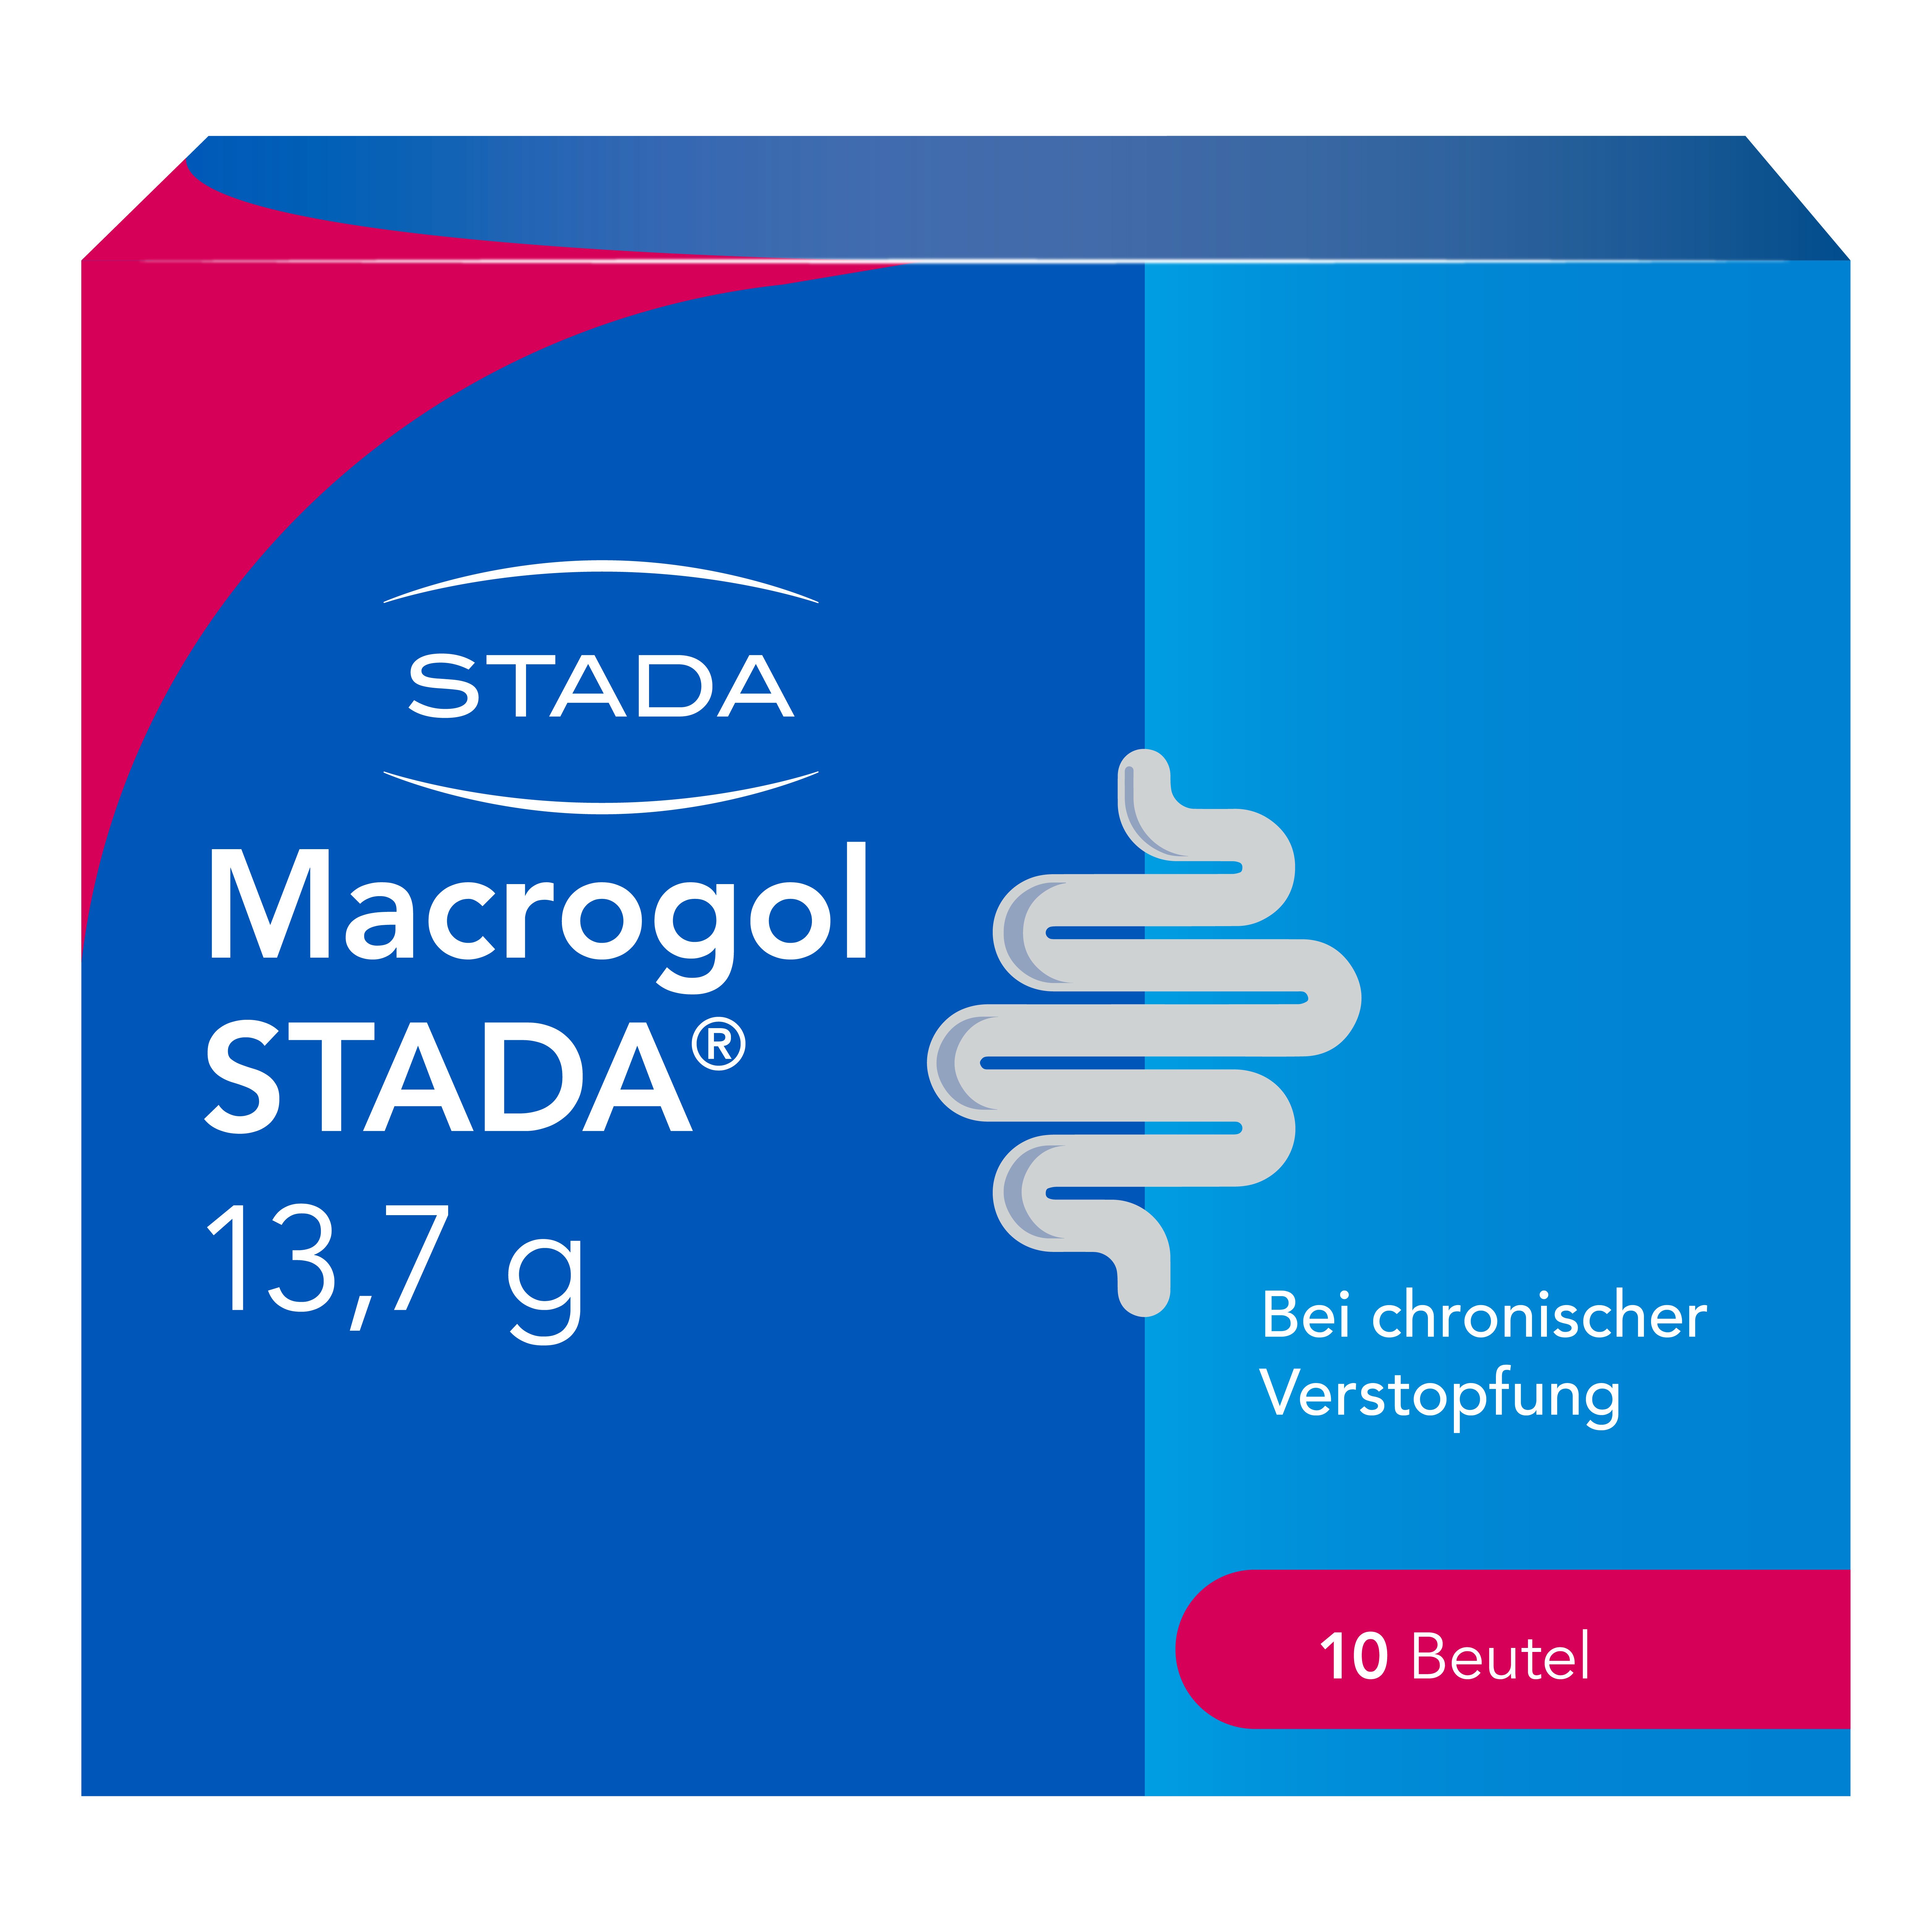 Macrogol Stada® 13.7g bei Verstopfungen